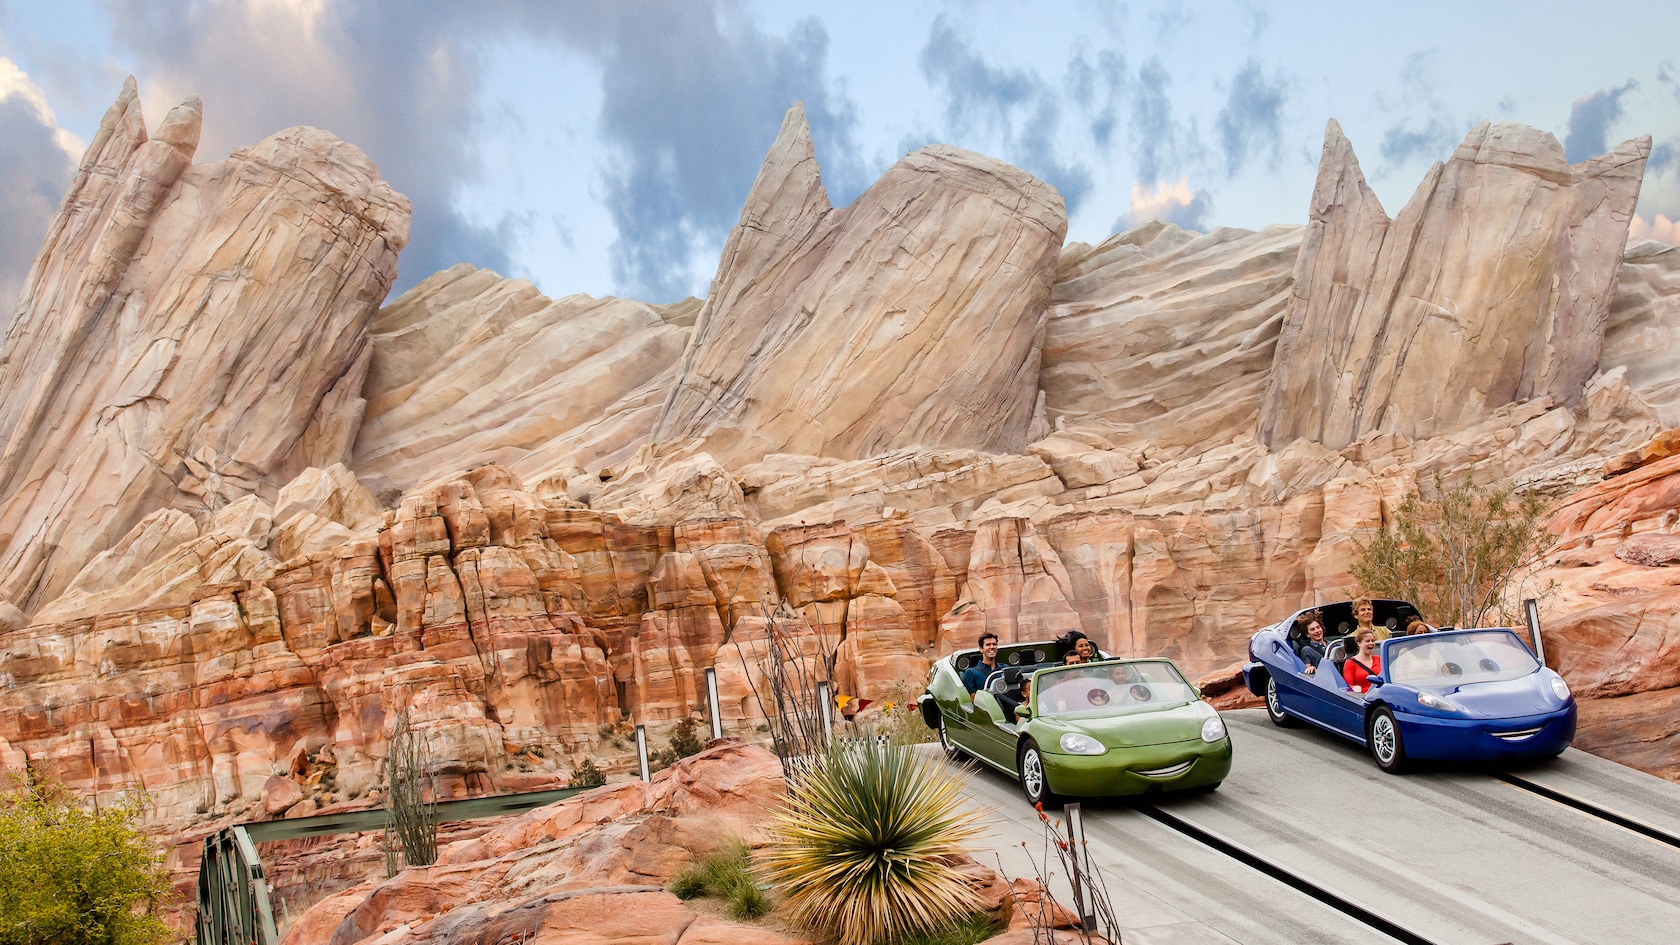 Radiator Springs Racers Rides & Attractions Disney California